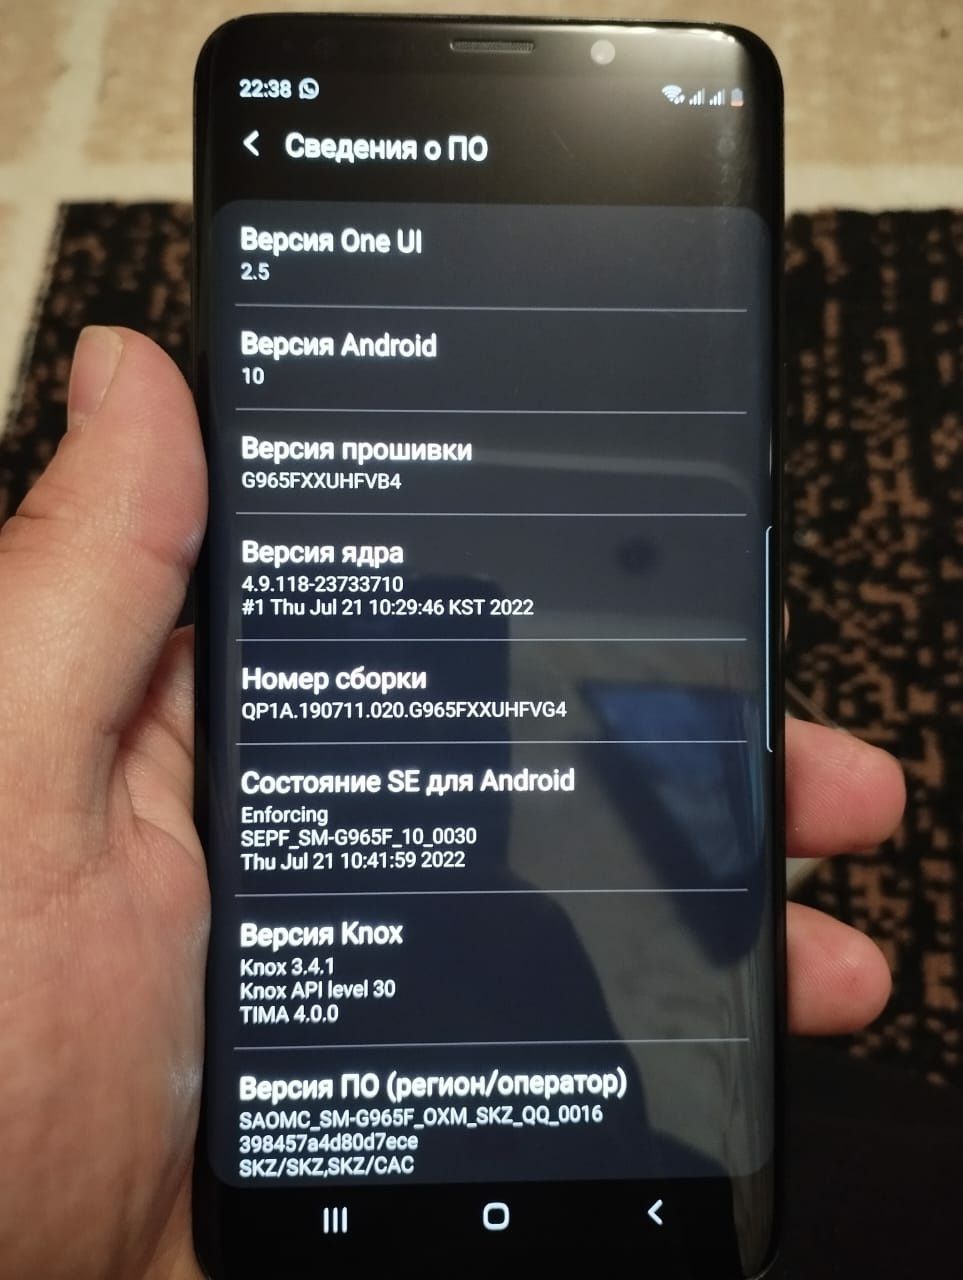 Samsung Galaxy S9+ 10 андройд/ Самсунг Галакси С9+